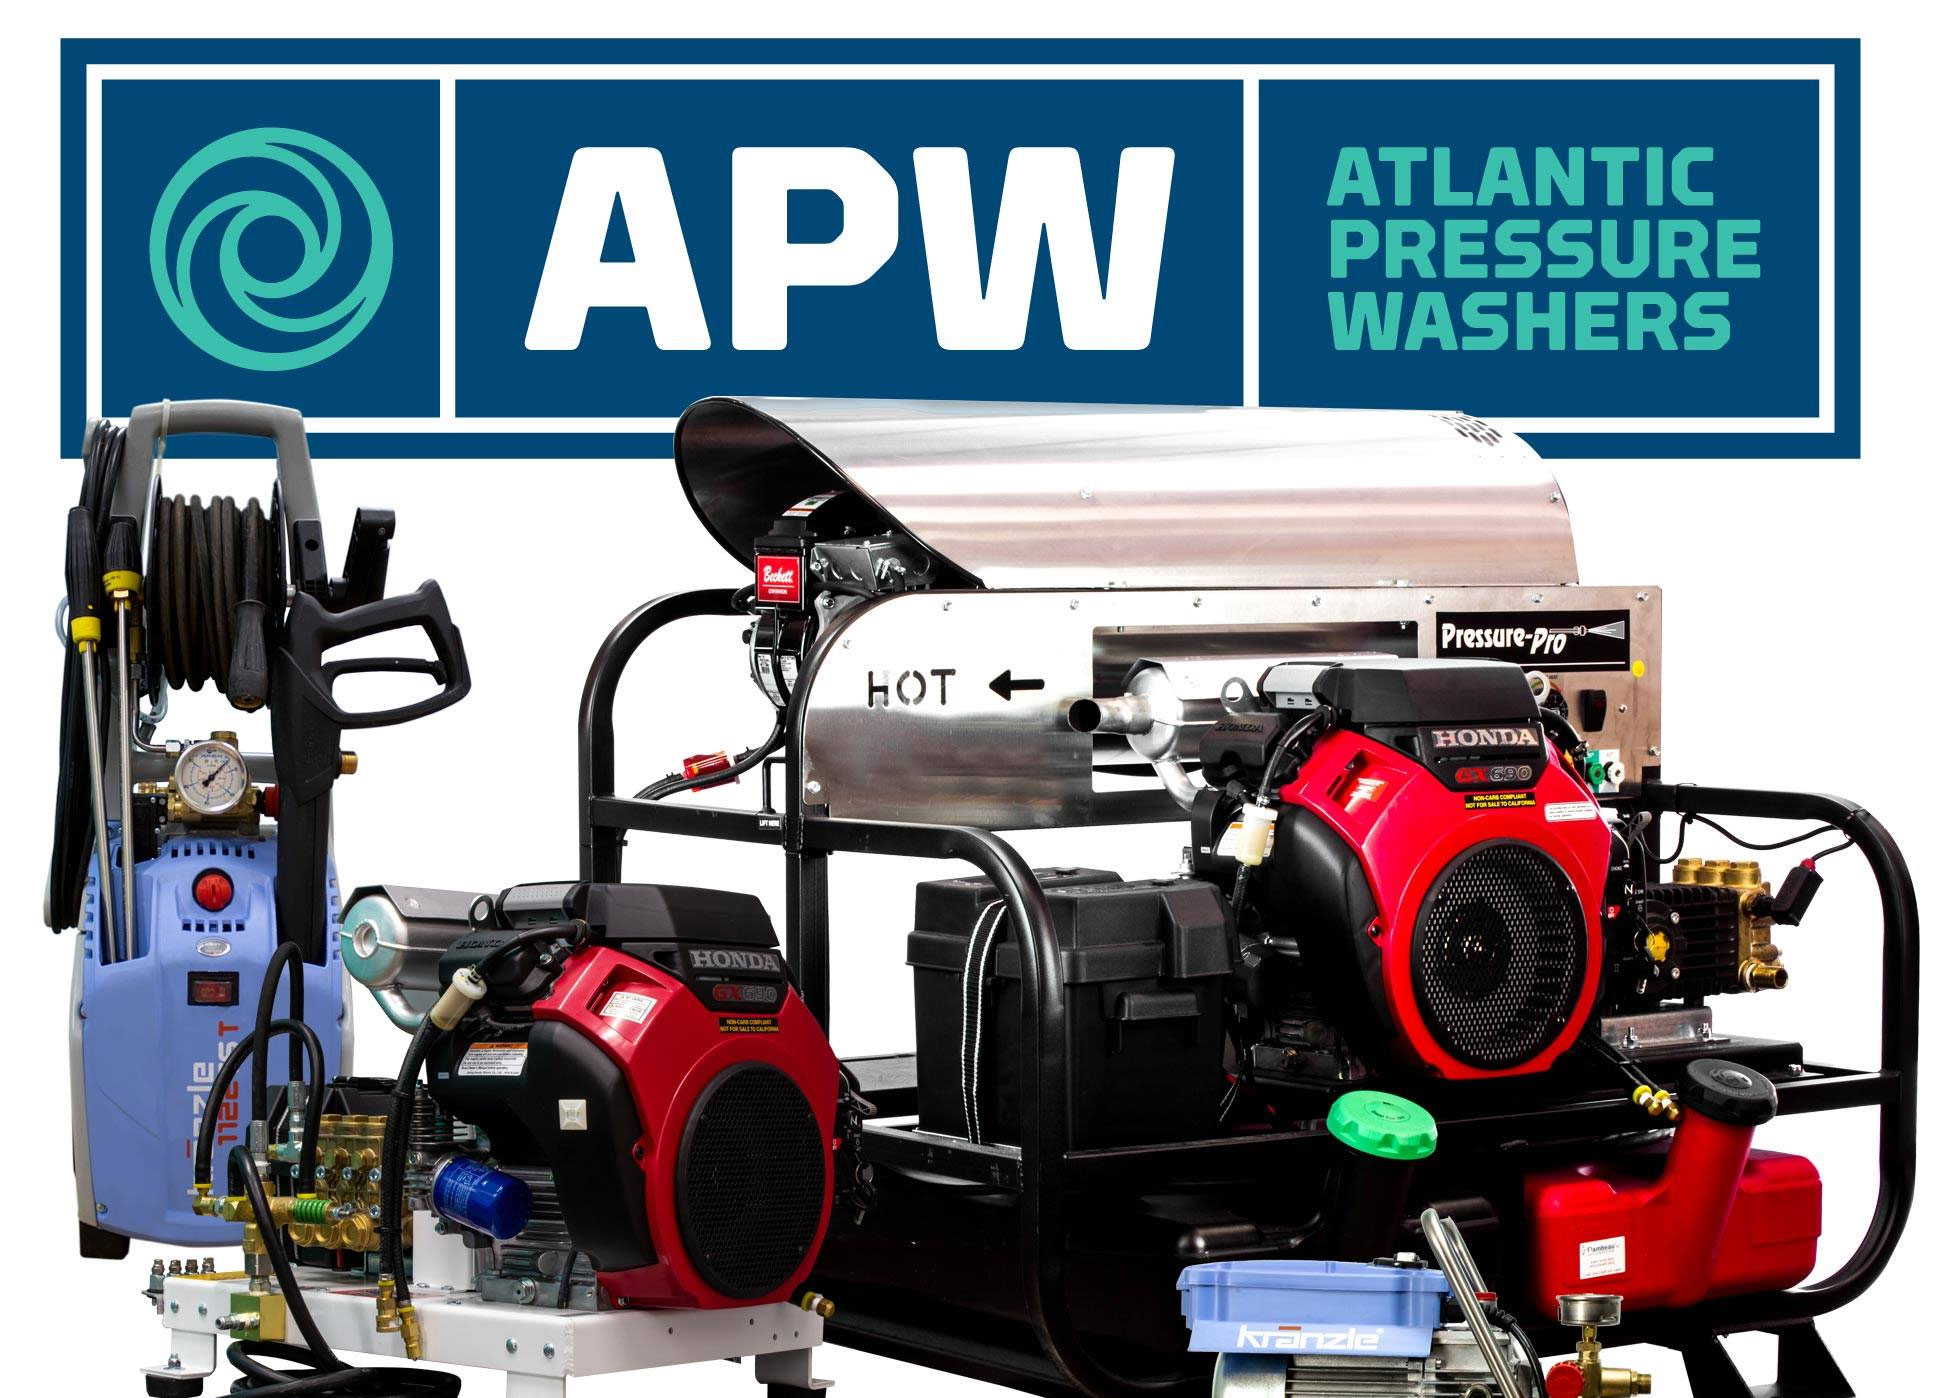 Atlantic Pressure Washers Maryland